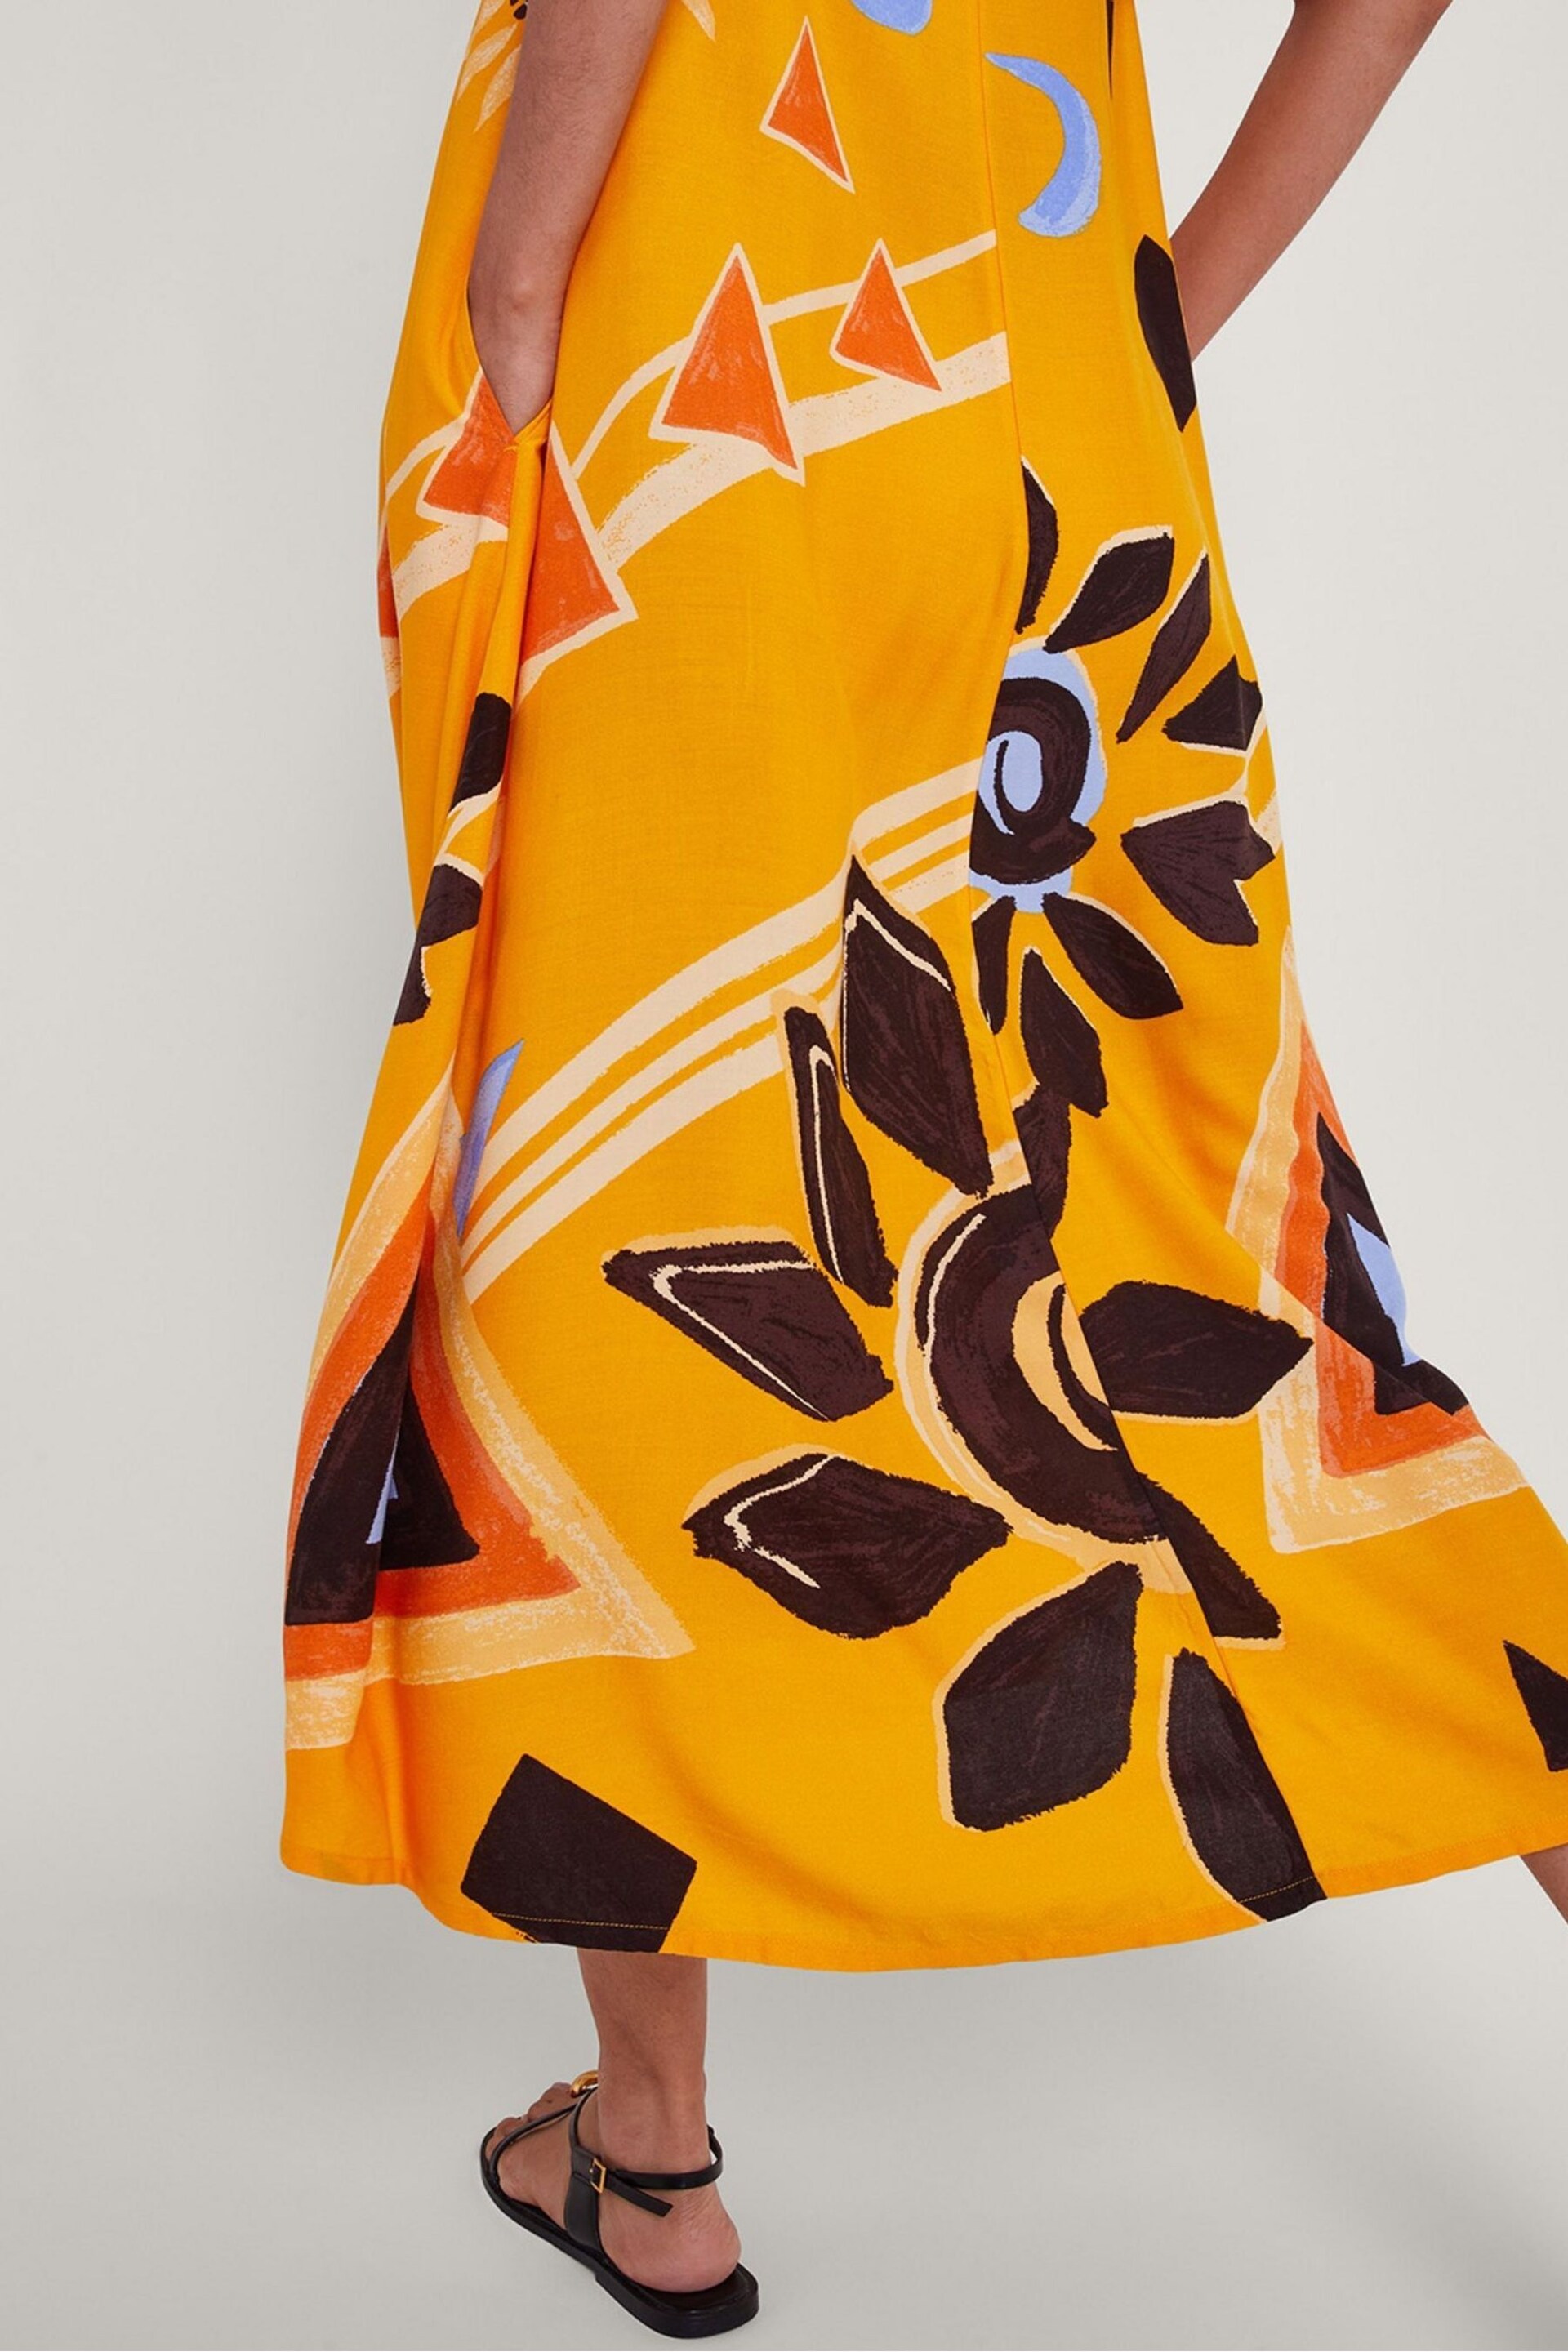 Monsoon Orange Amanda Print Dress - Image 4 of 5